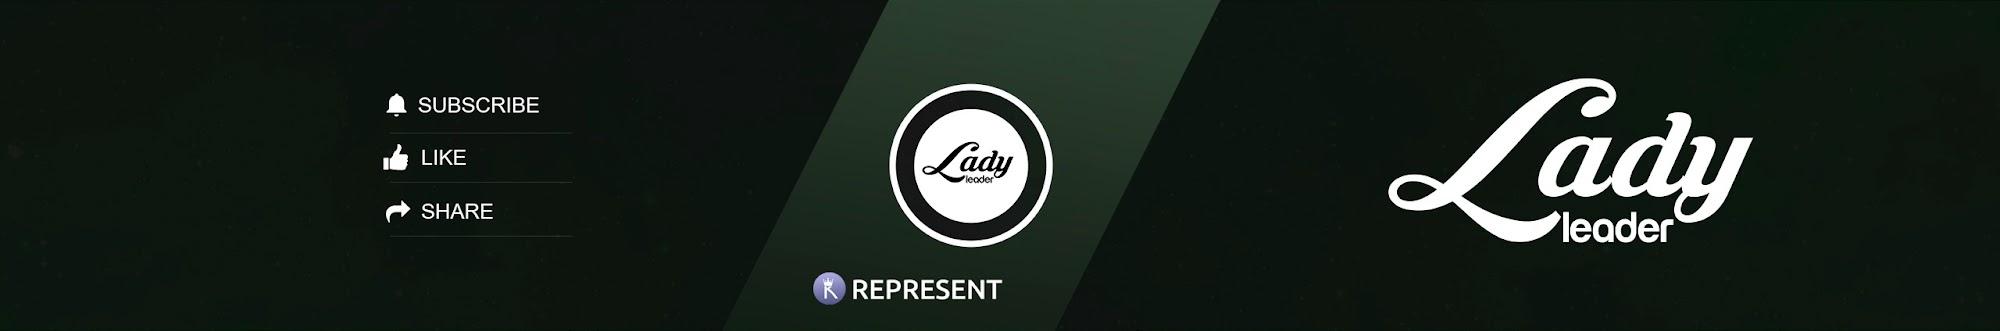 Lady Leader